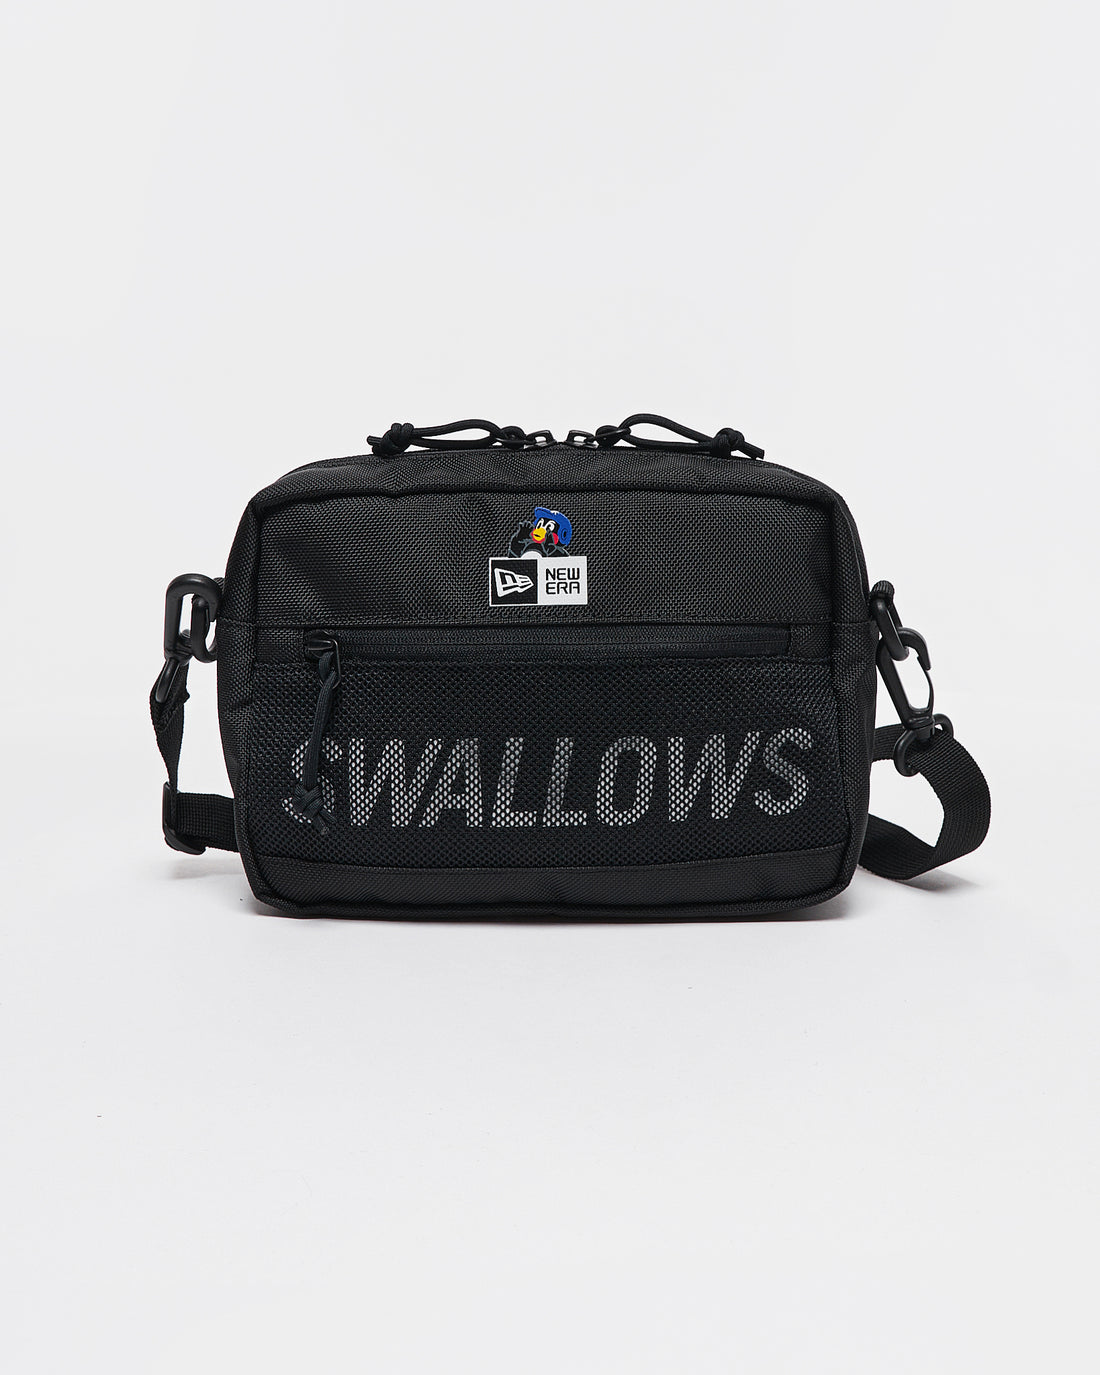 Swallows Black Sling Bag 13.90